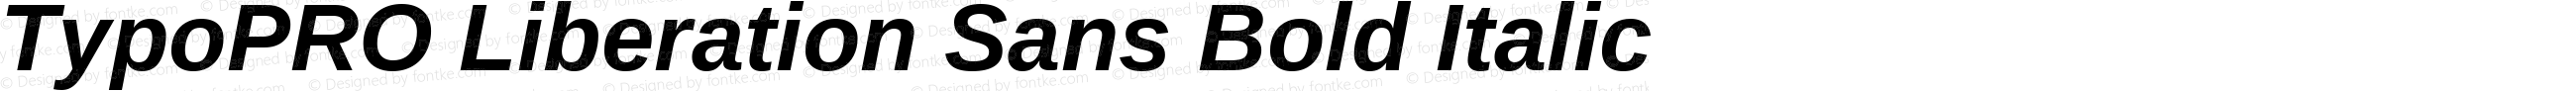 TypoPRO Liberation Sans Bold Italic